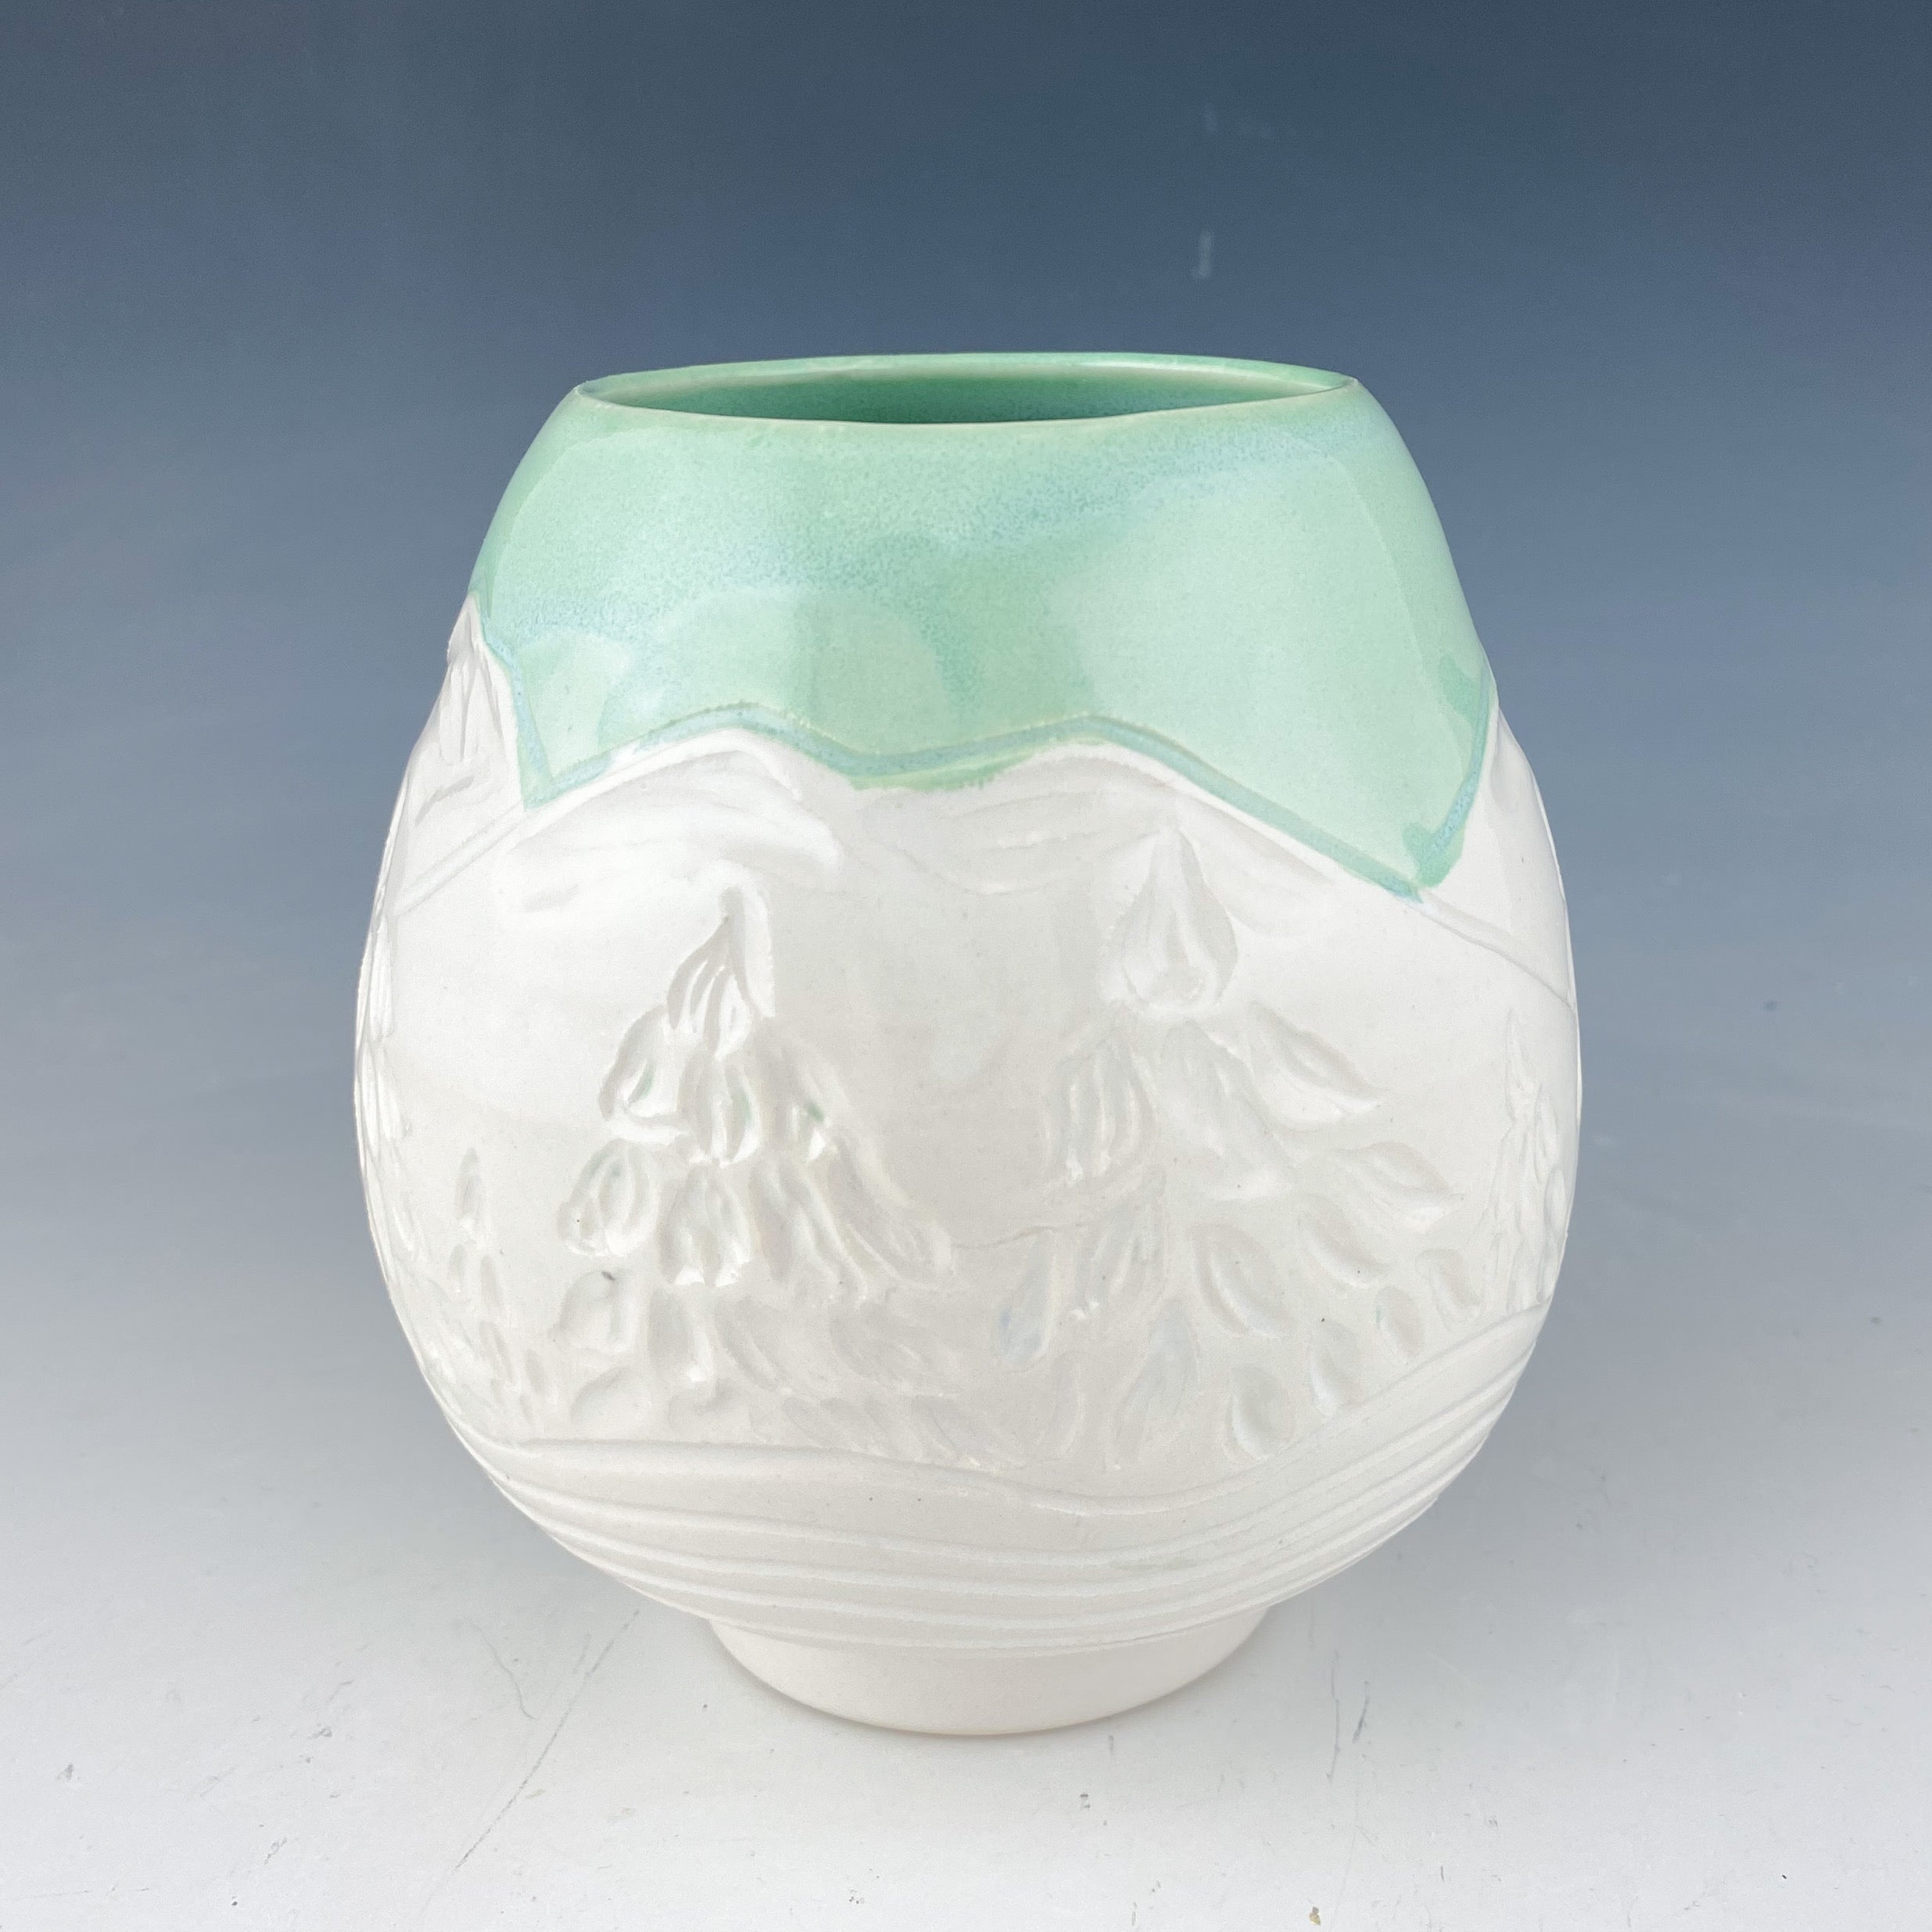 Winter Scene Votive and Vase in Aqua and White Porcelain